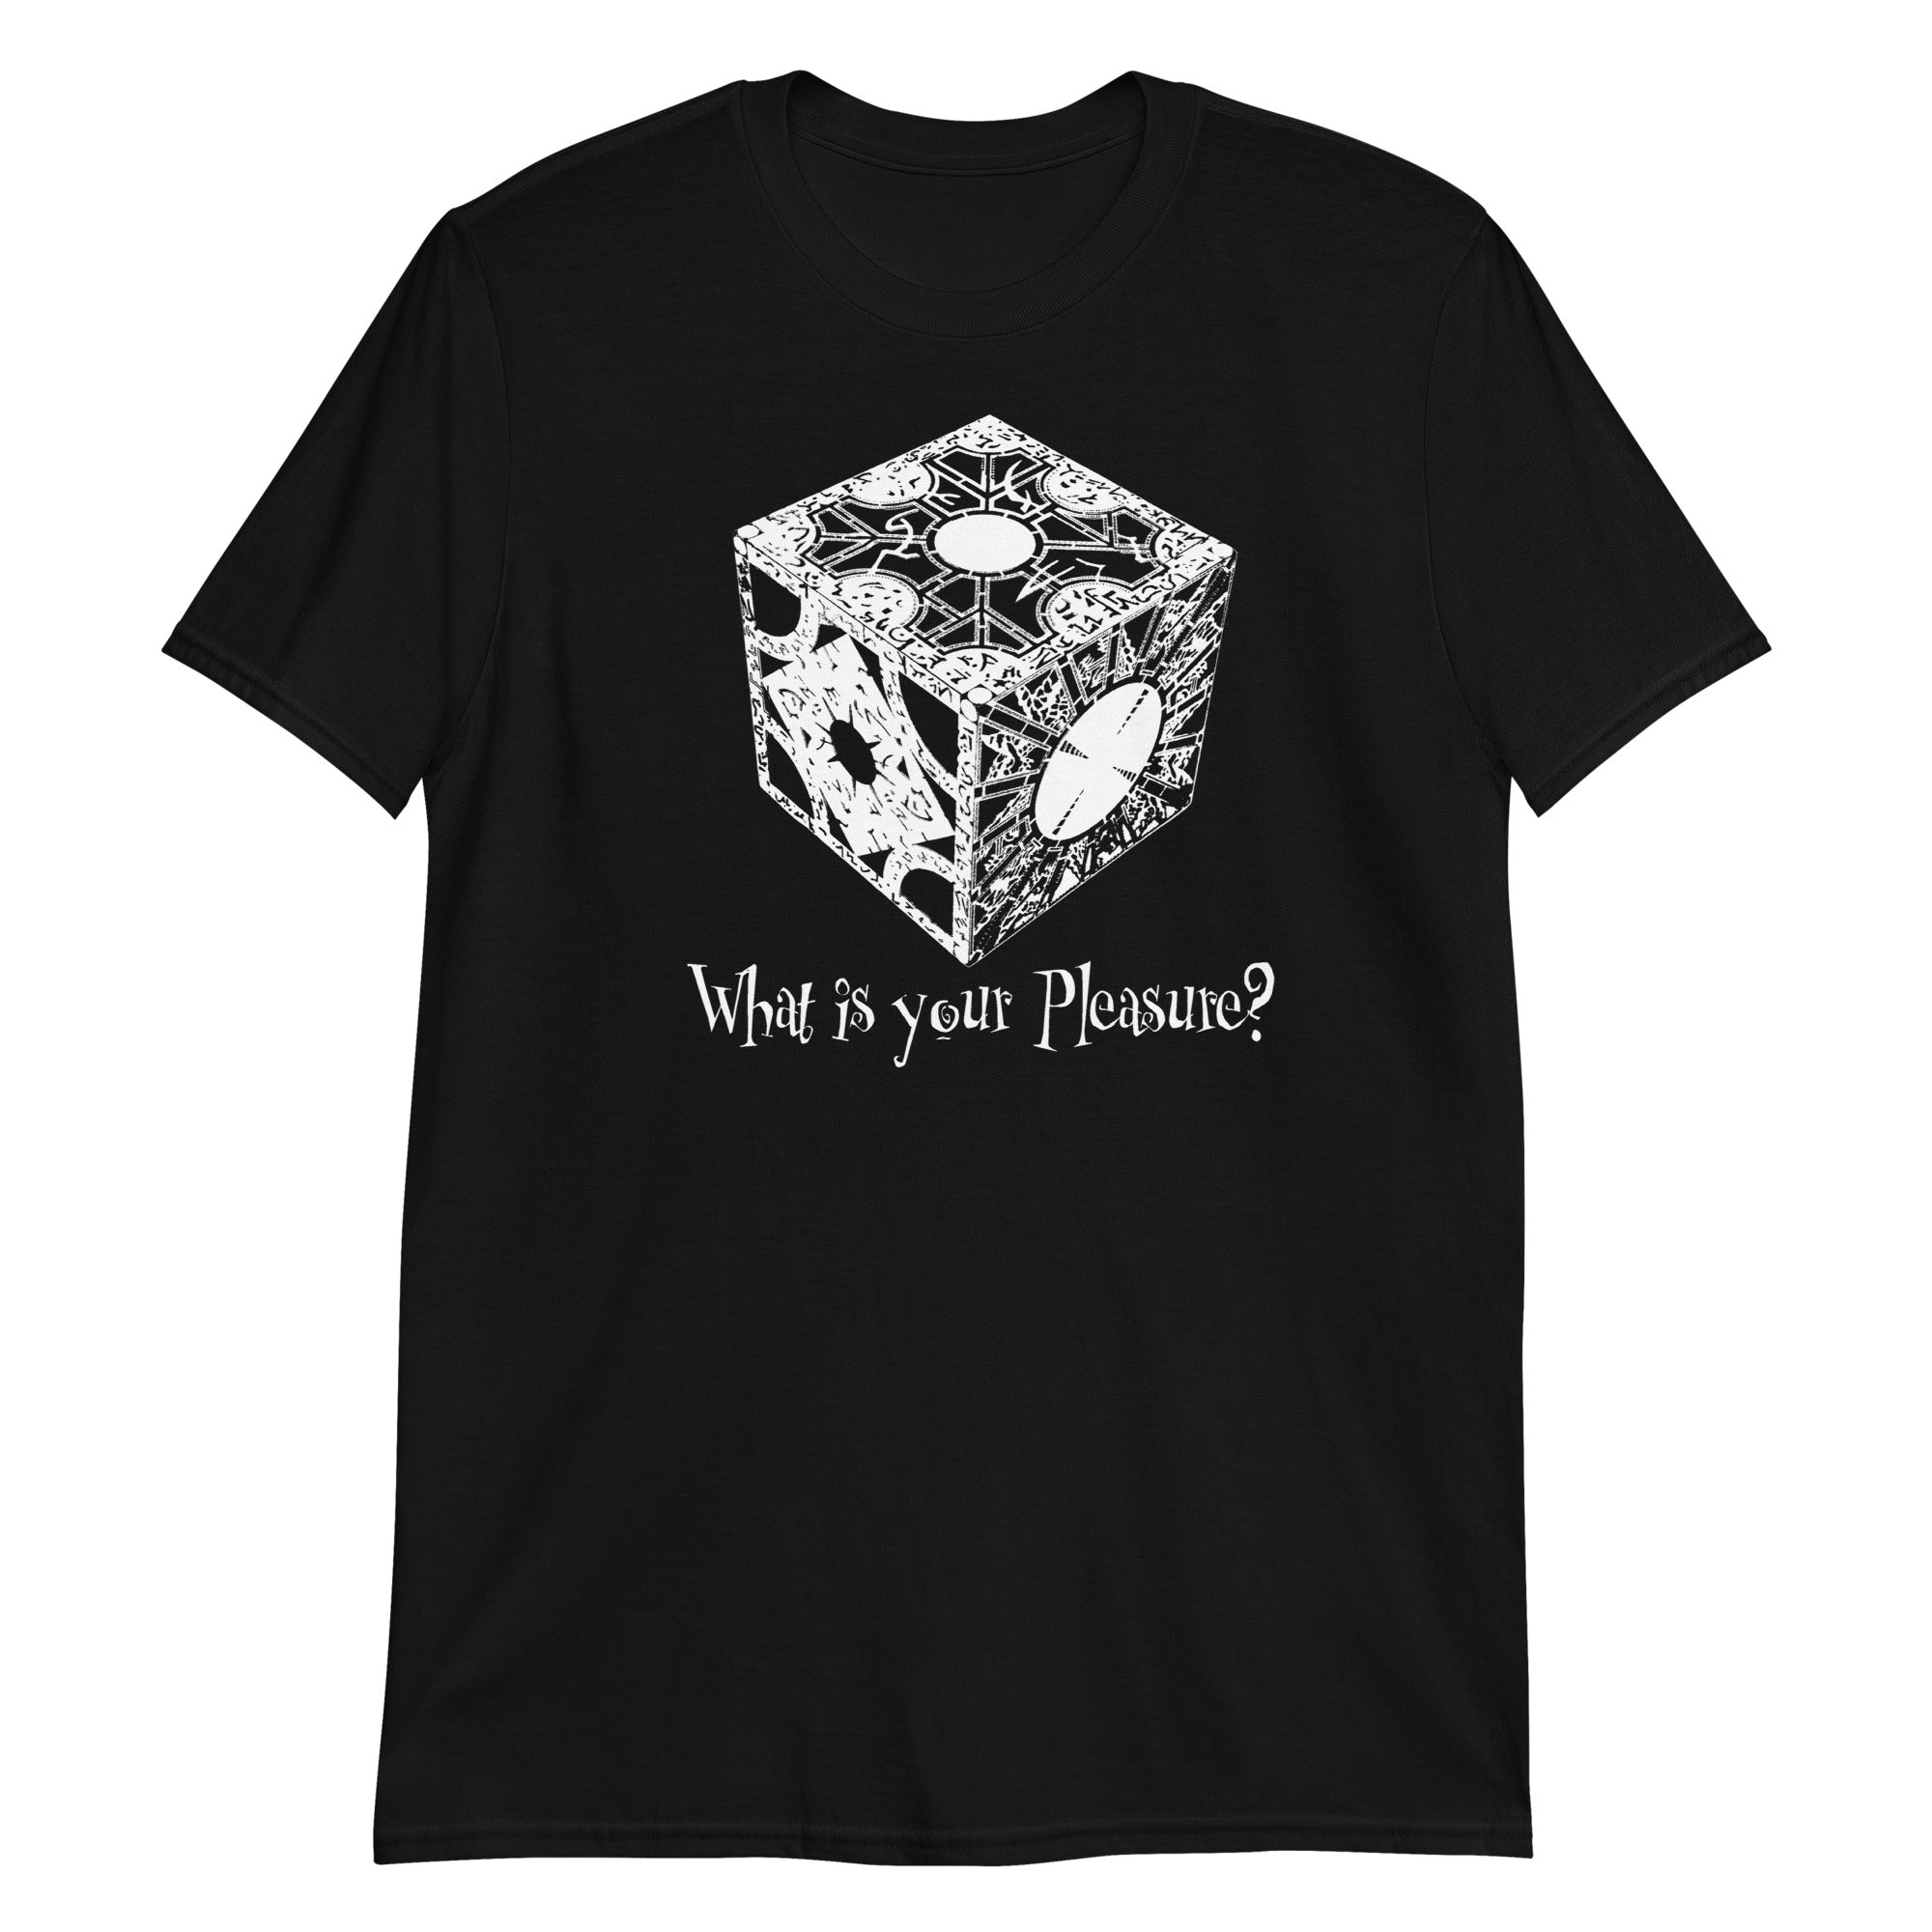 Hellraiser Puzzle Box - What is your Pleasure? Men's Short Sleeve T-Shirt - Edge of Life Designs